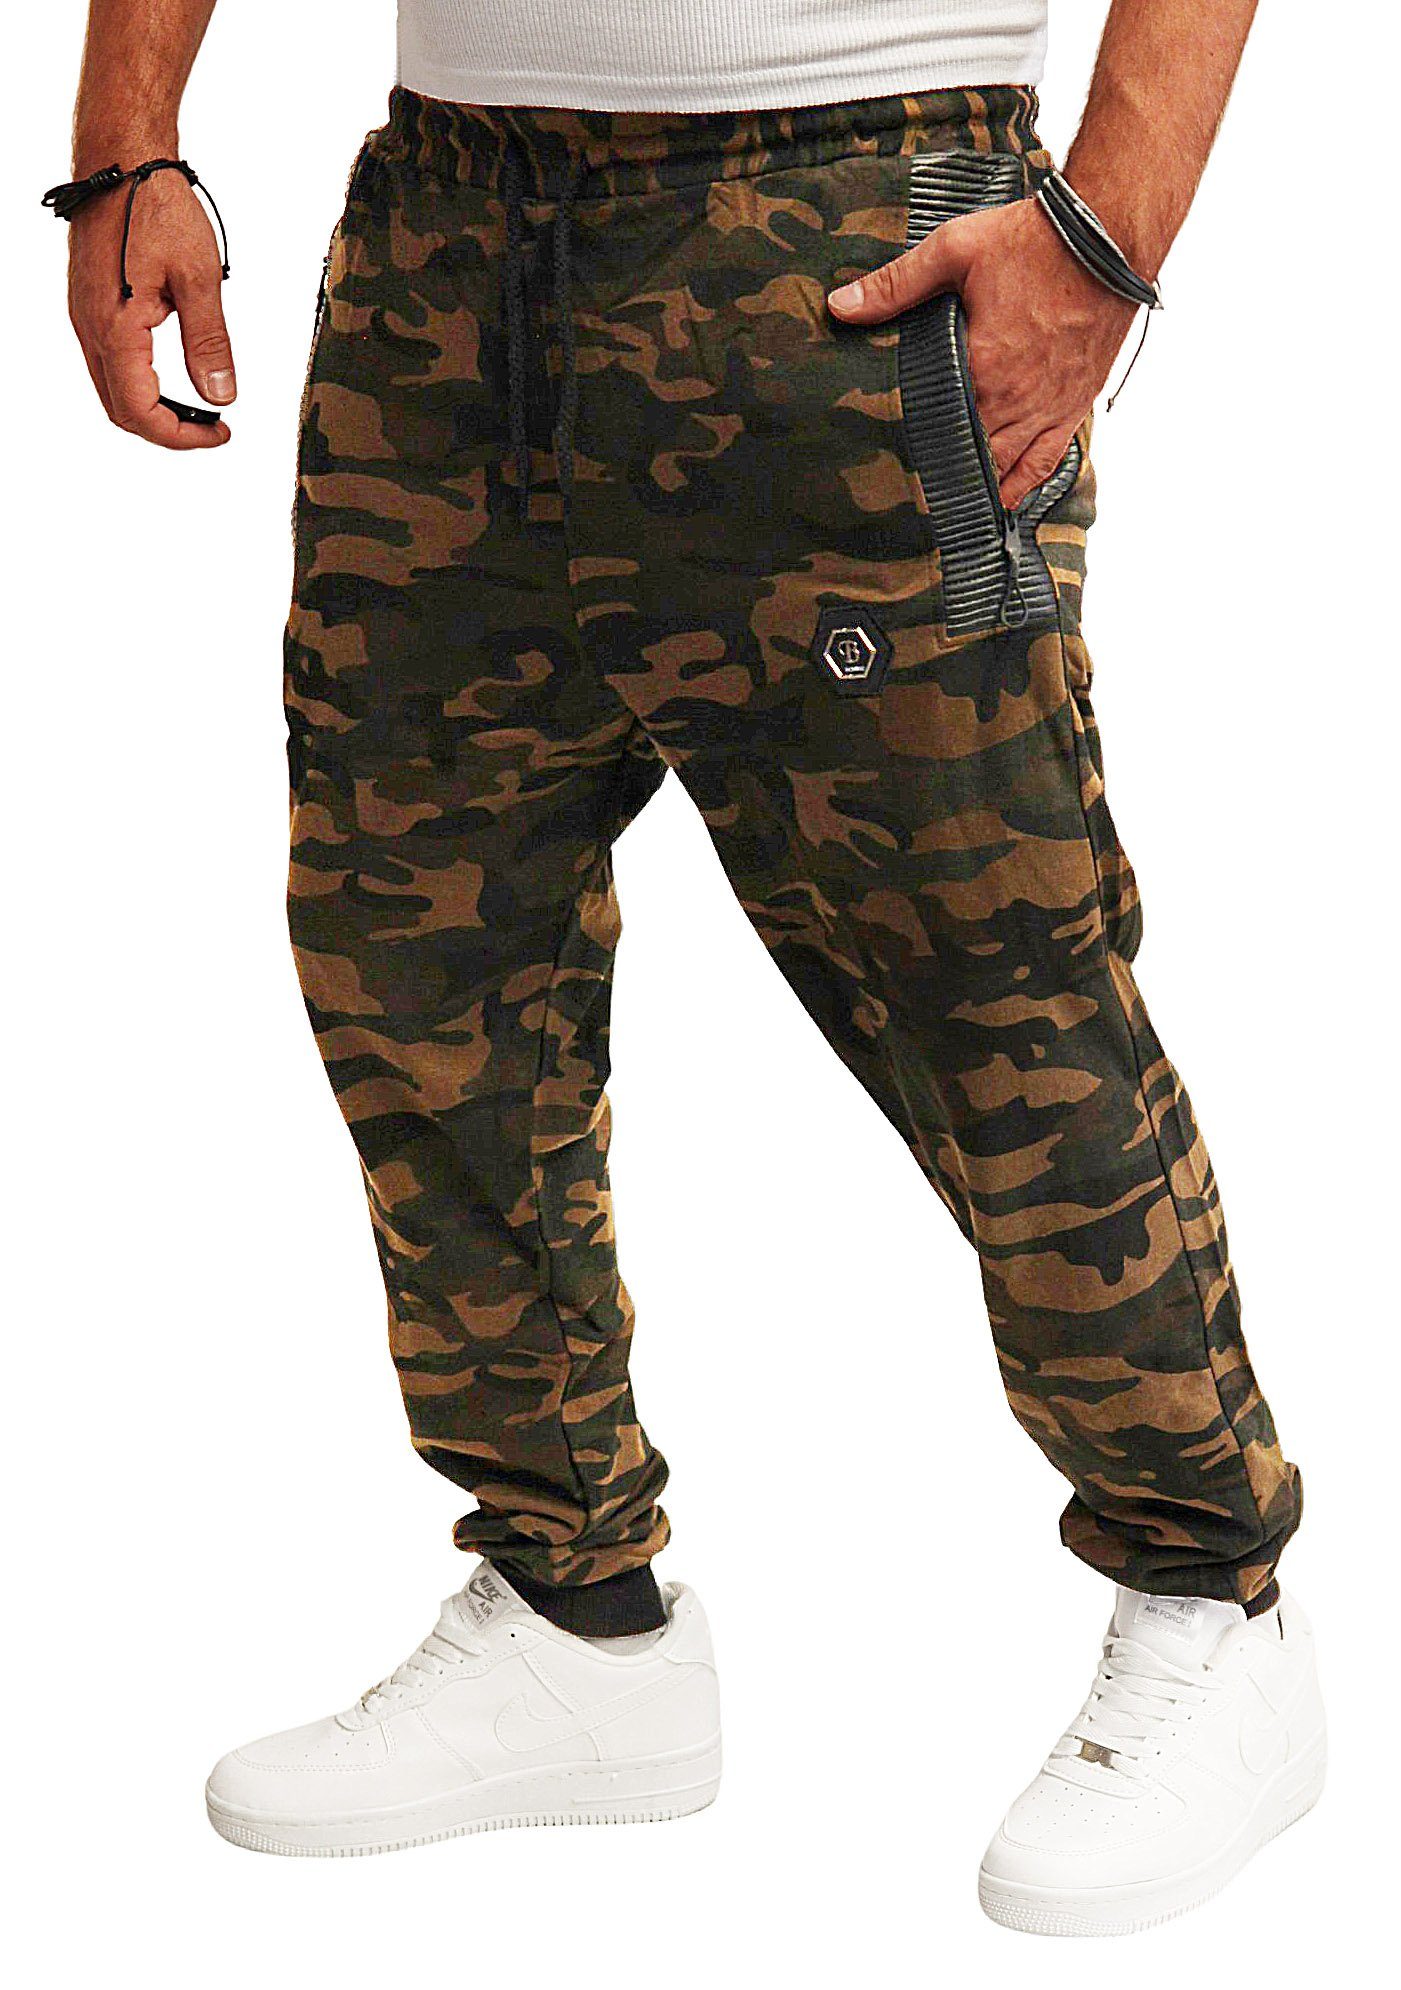 (051) Camou-Dunkel Jogginghose Hose RMK Trainingshose Camouflage Tarn Herren Fitnesshose Army